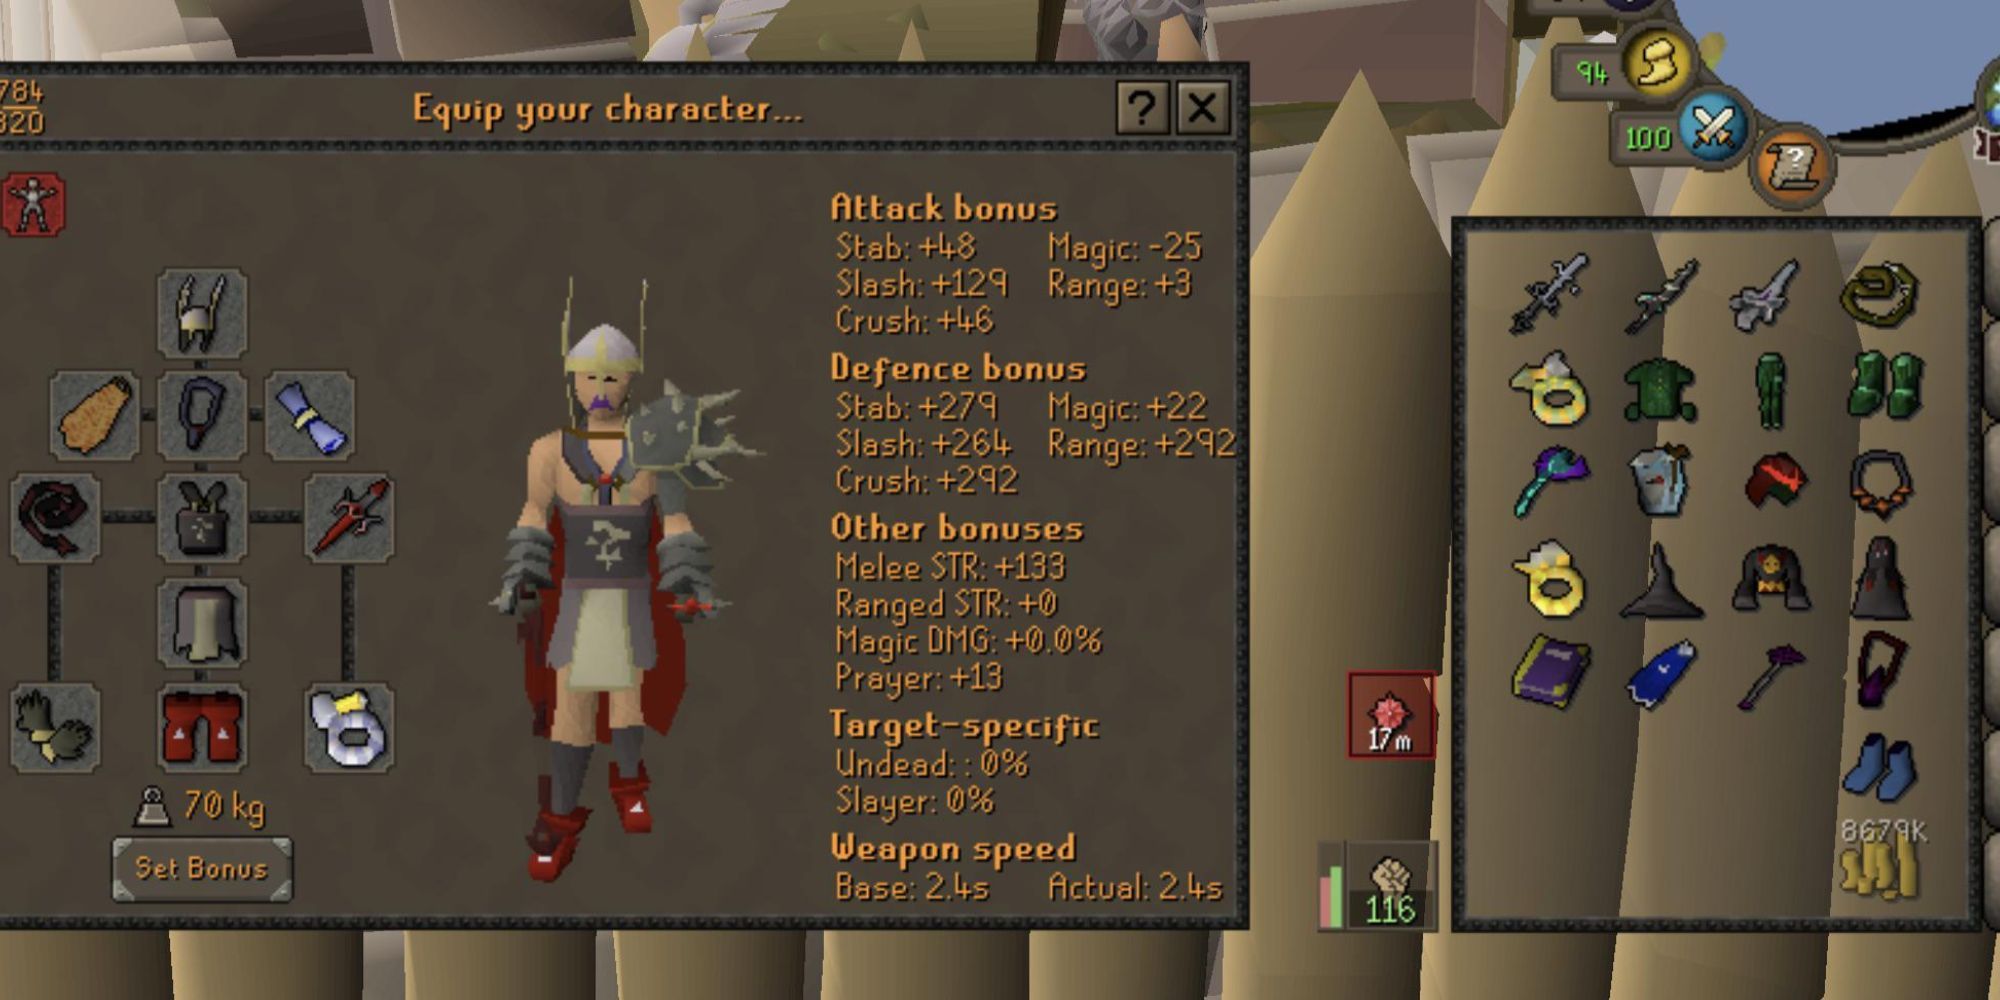 A character equipment screen showing combat bonuses in orange text.